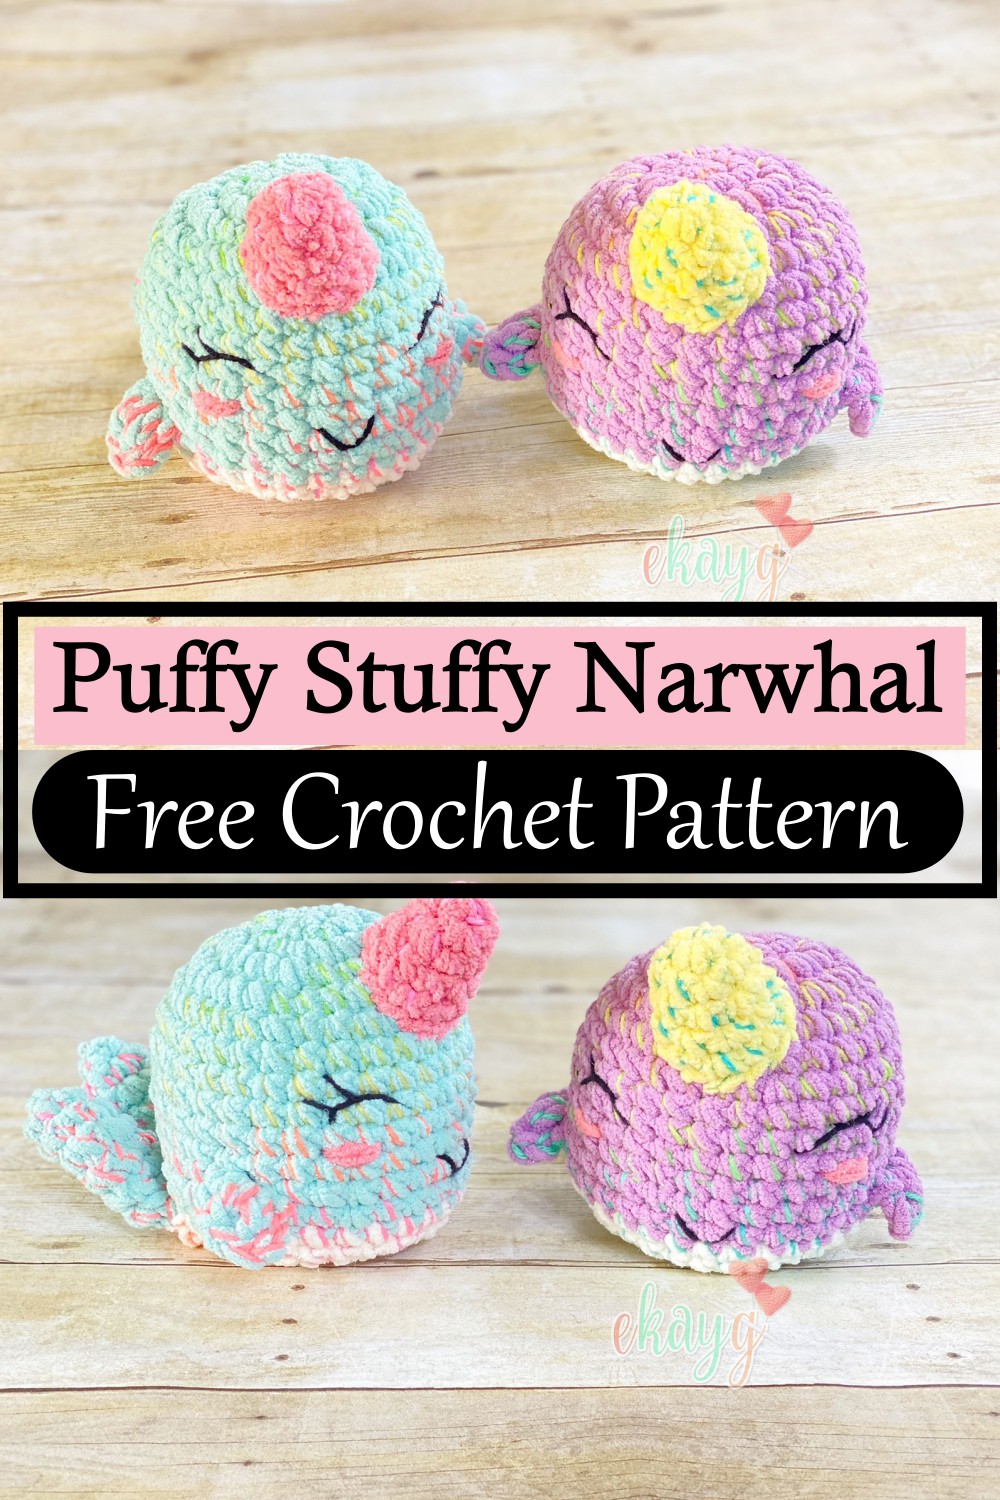 Puffy Stuffy Narwhal